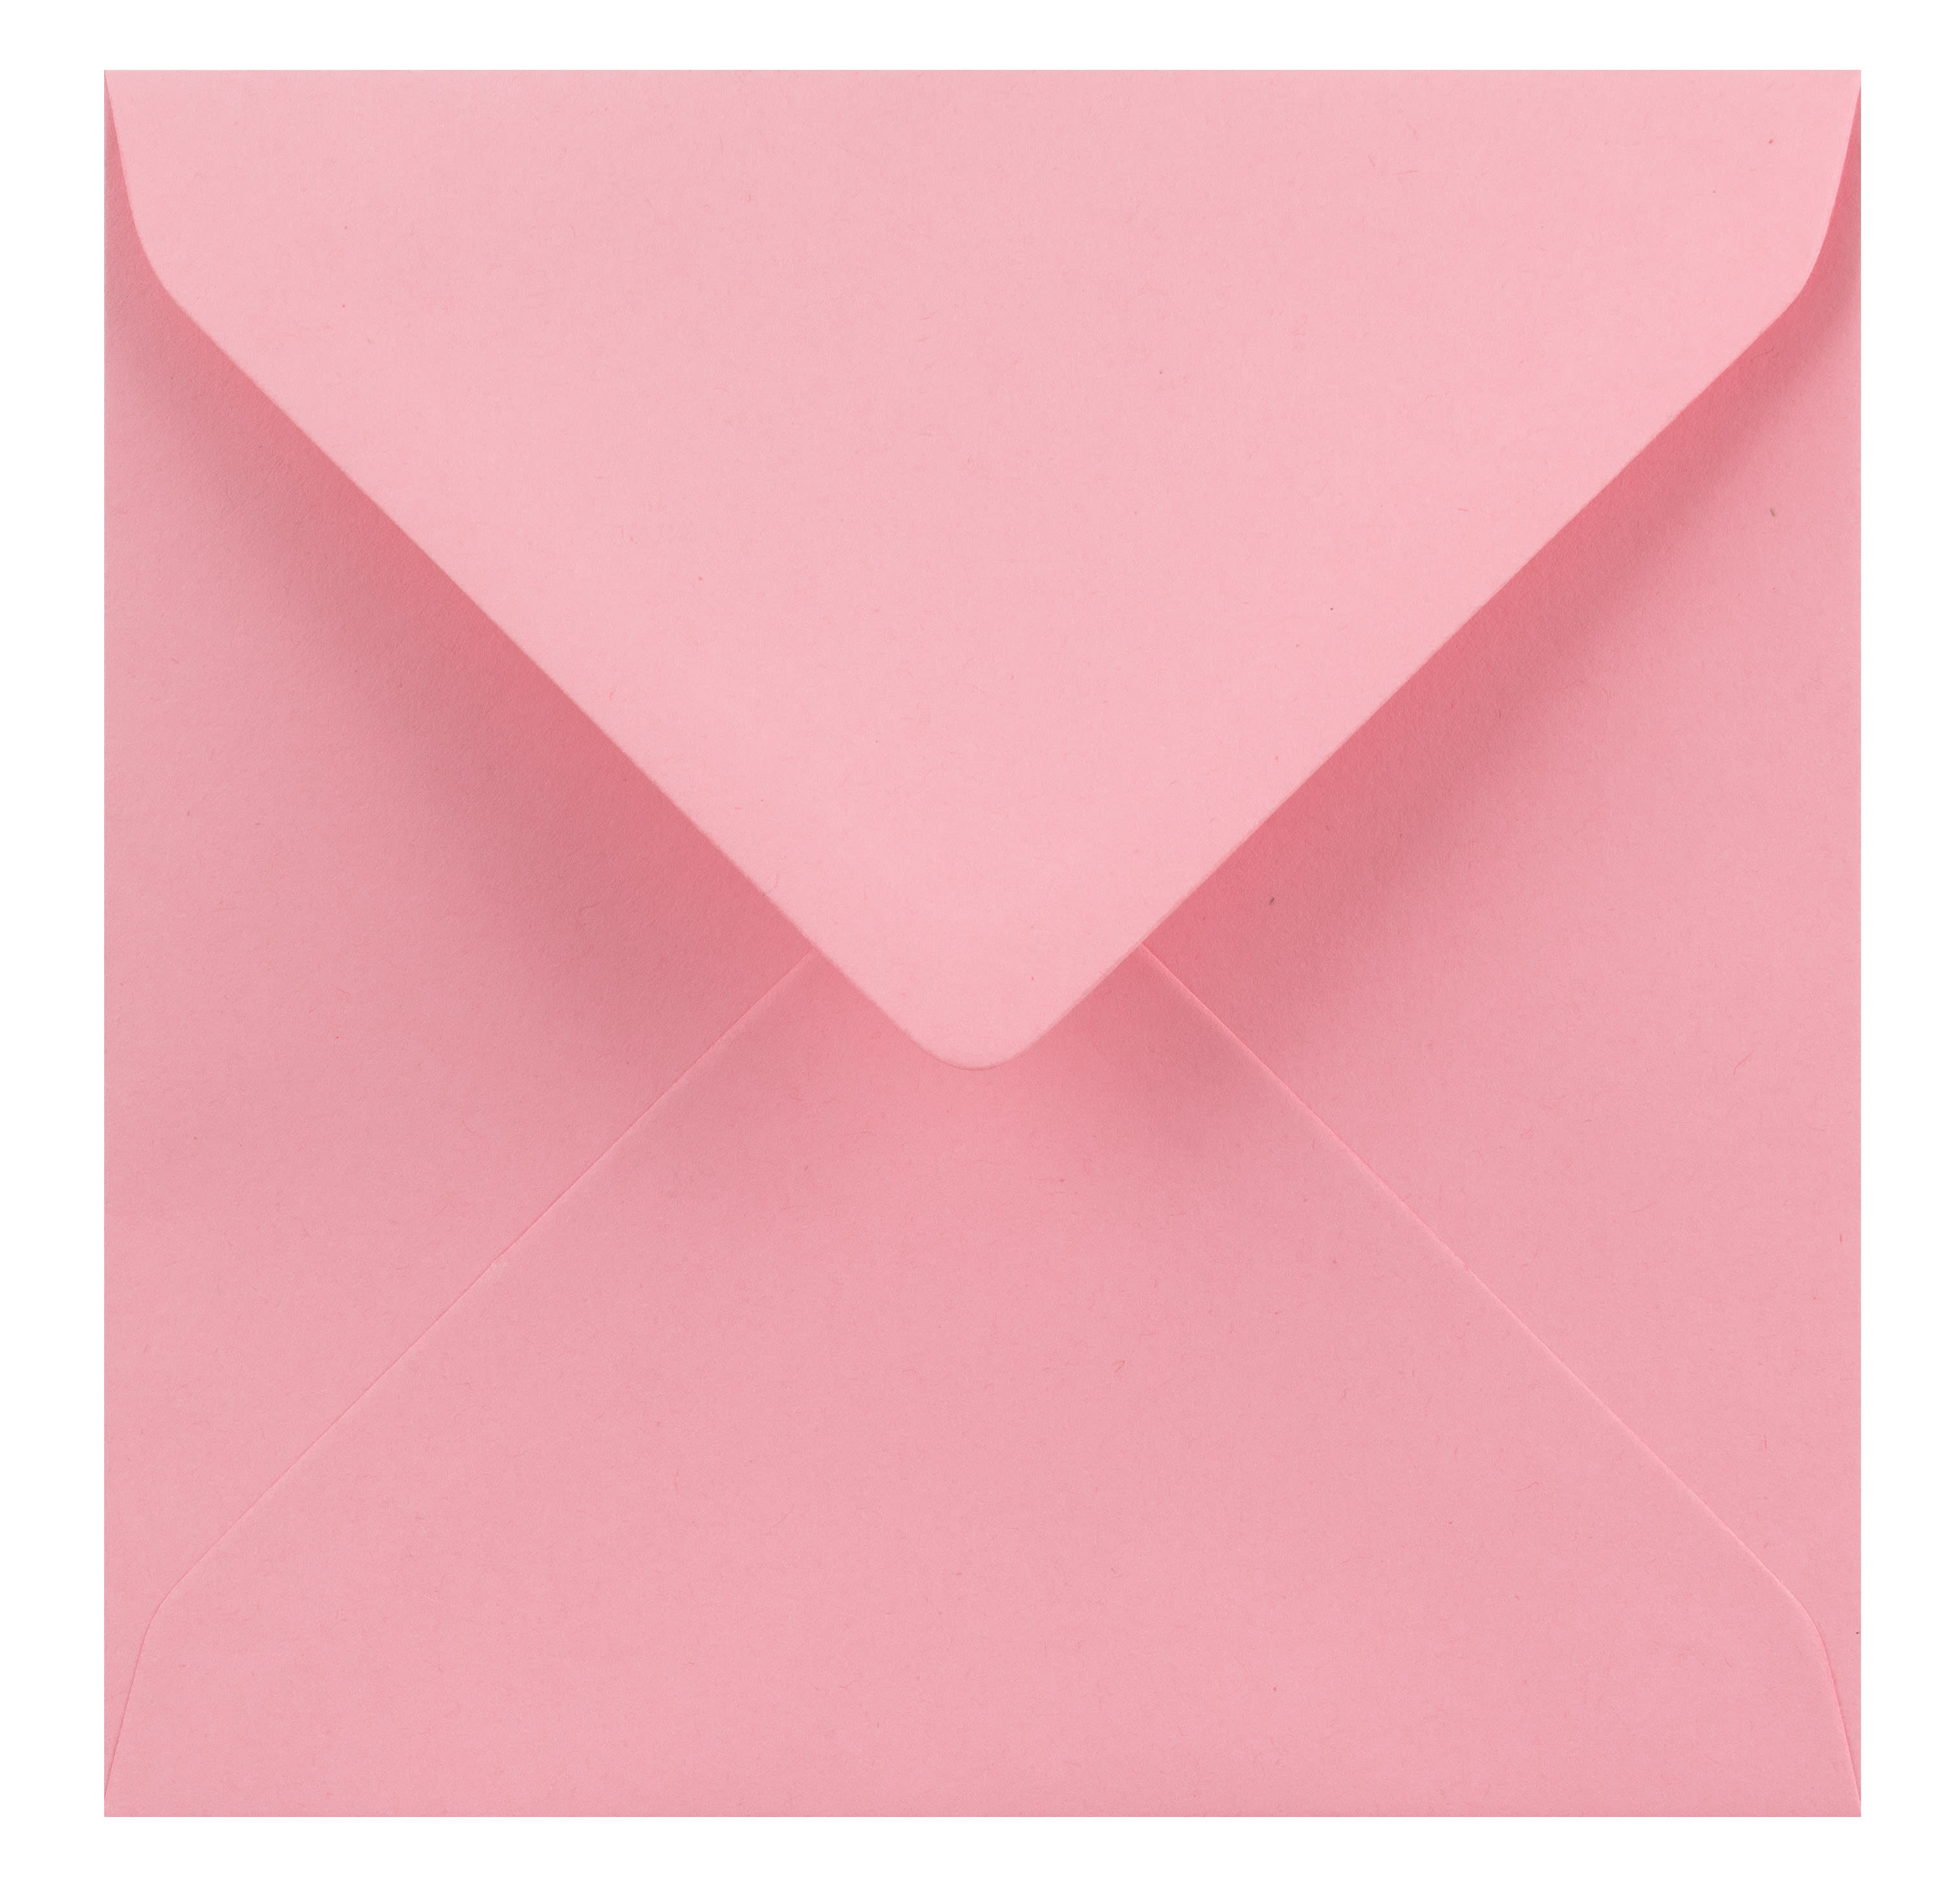 5.12 x 5.12 " Pink Square Envelopes 68lb